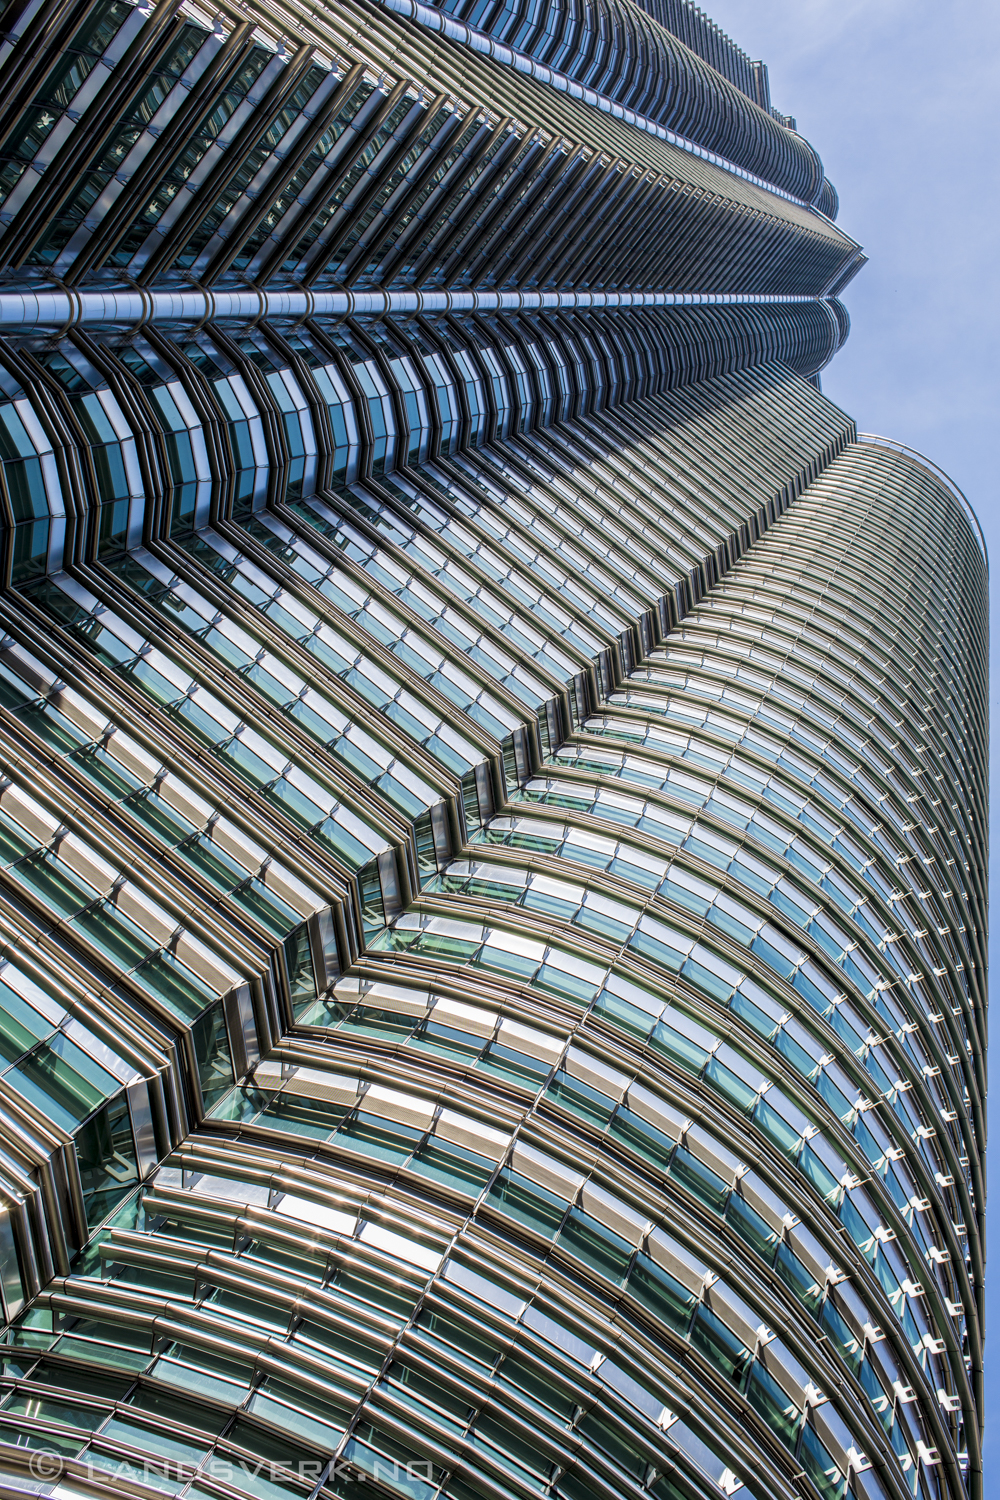 Petronas Twin Towers. Kuala Lumpur, Malaysia.

(Canon EOS 5D Mark III / Canon EF 50mm f/1.2 L USM)